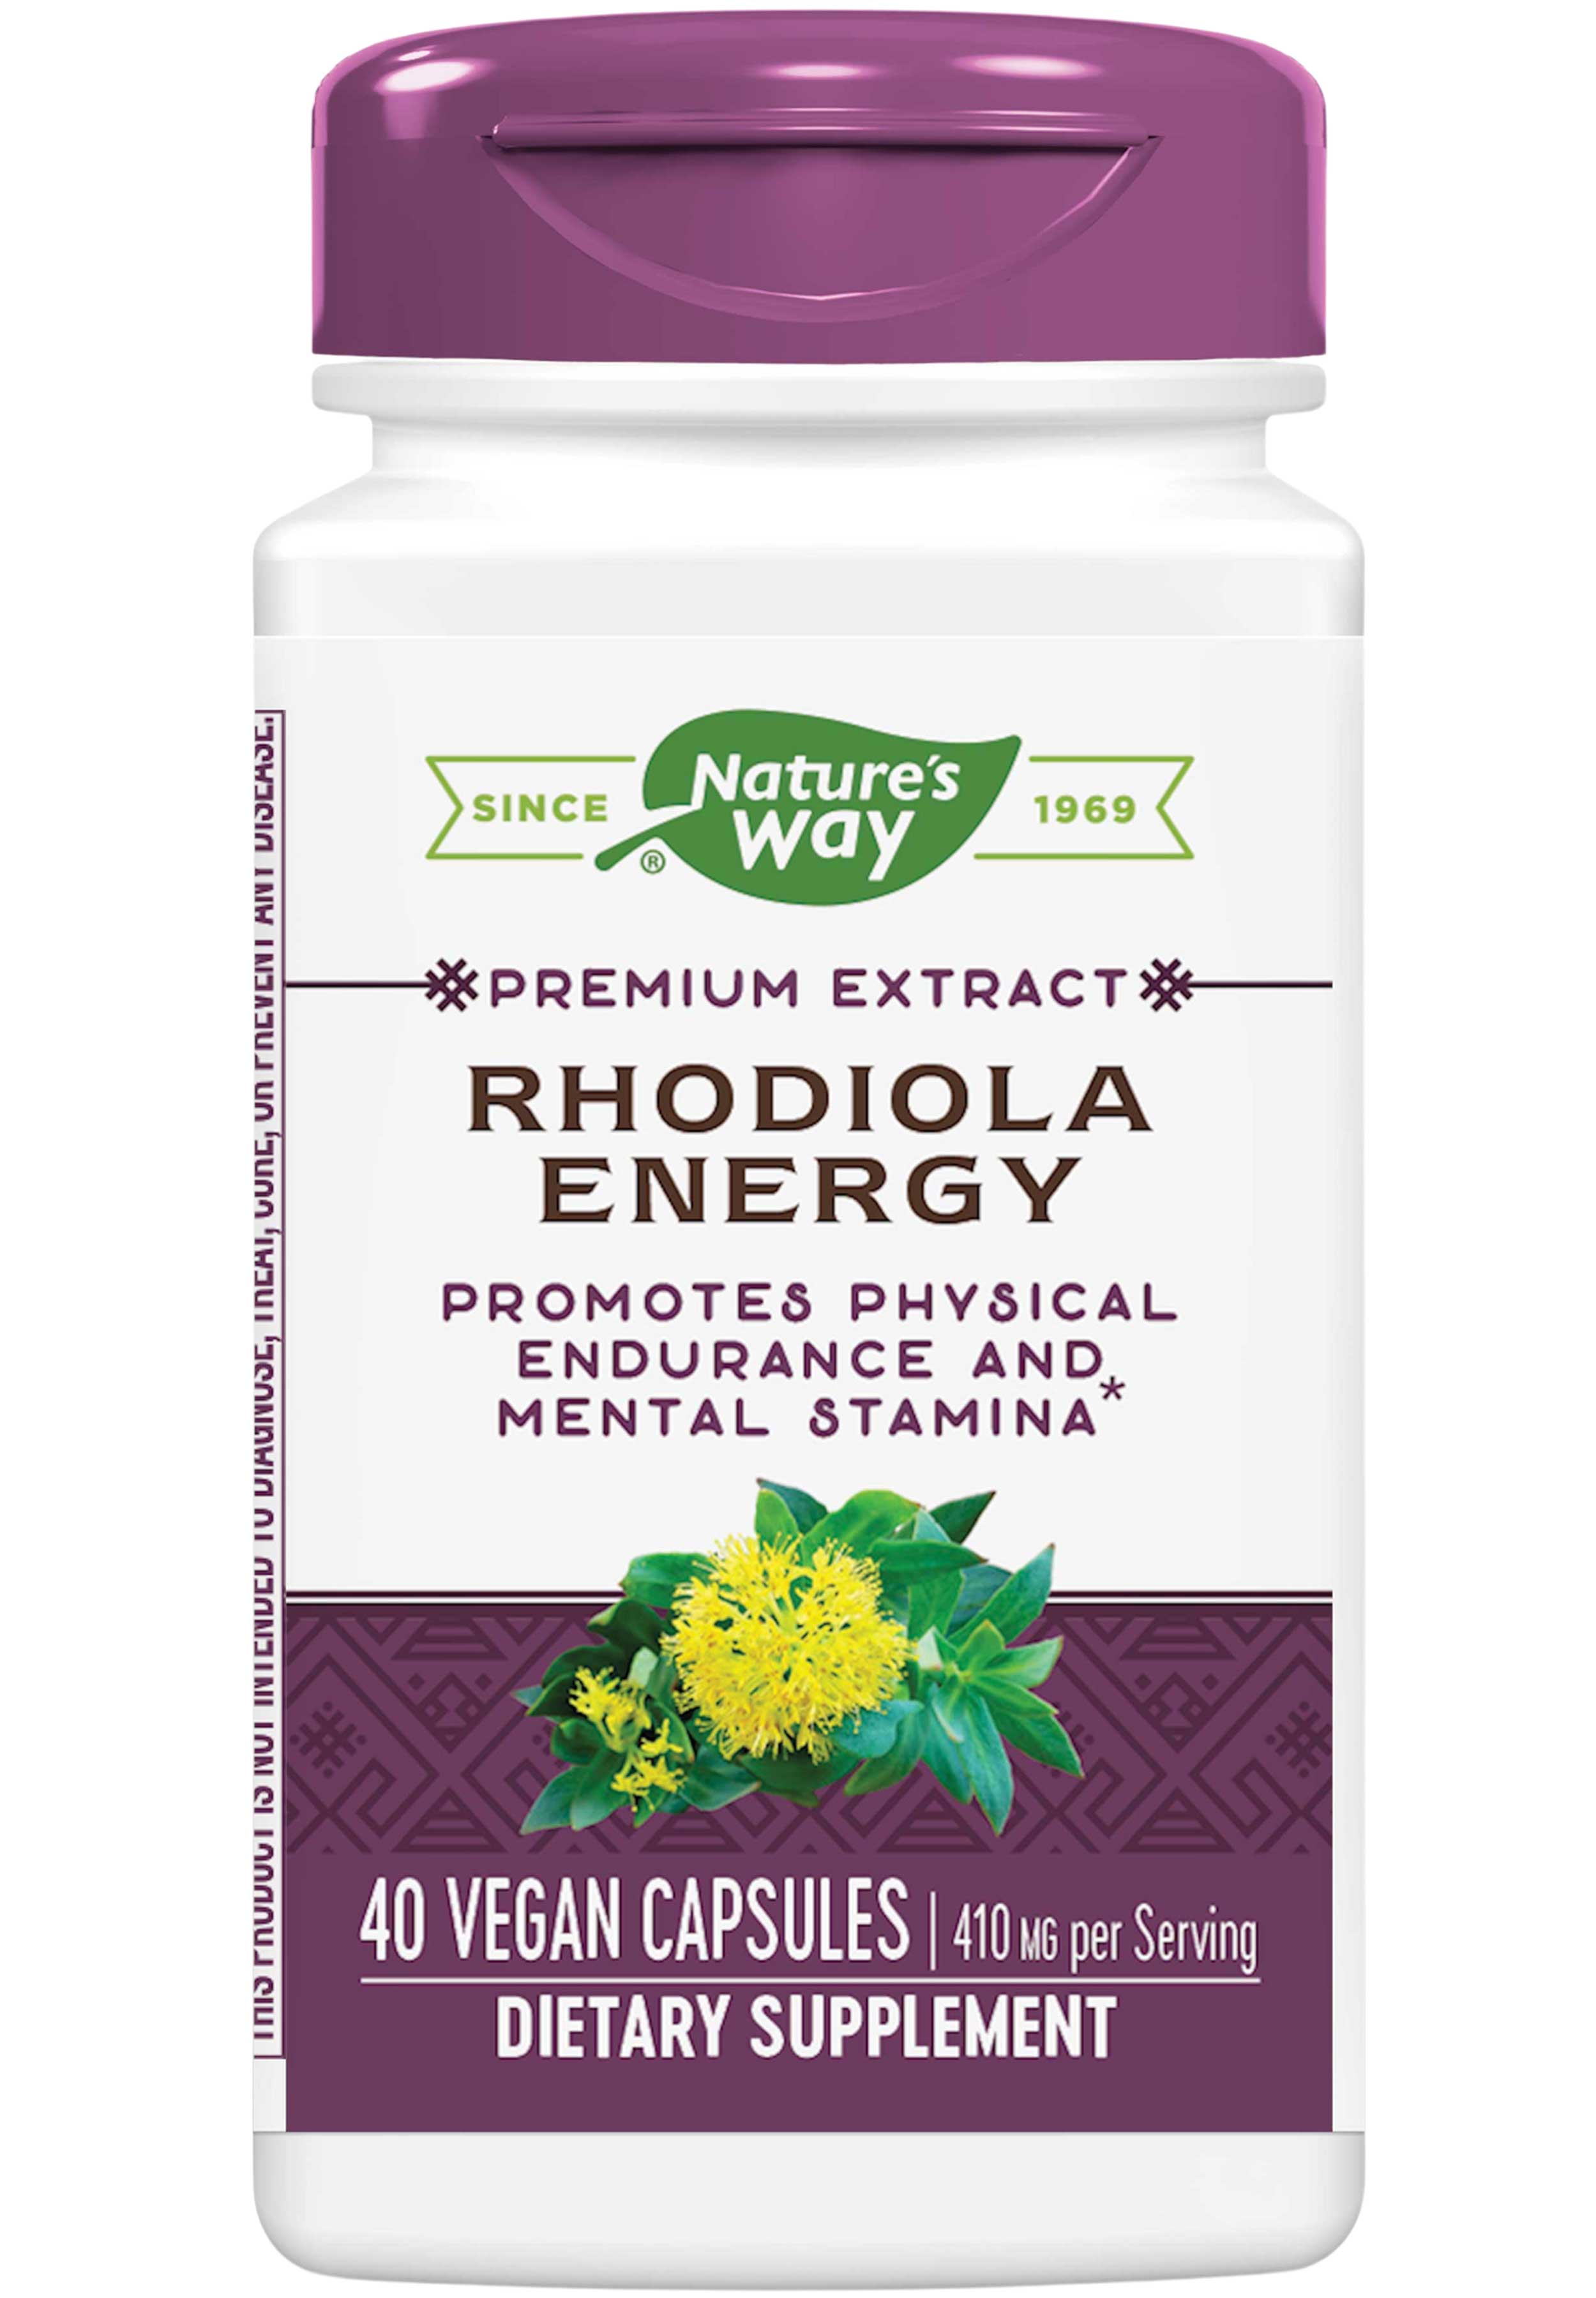 Nature's Way Rhodiola Energy Premium Extract